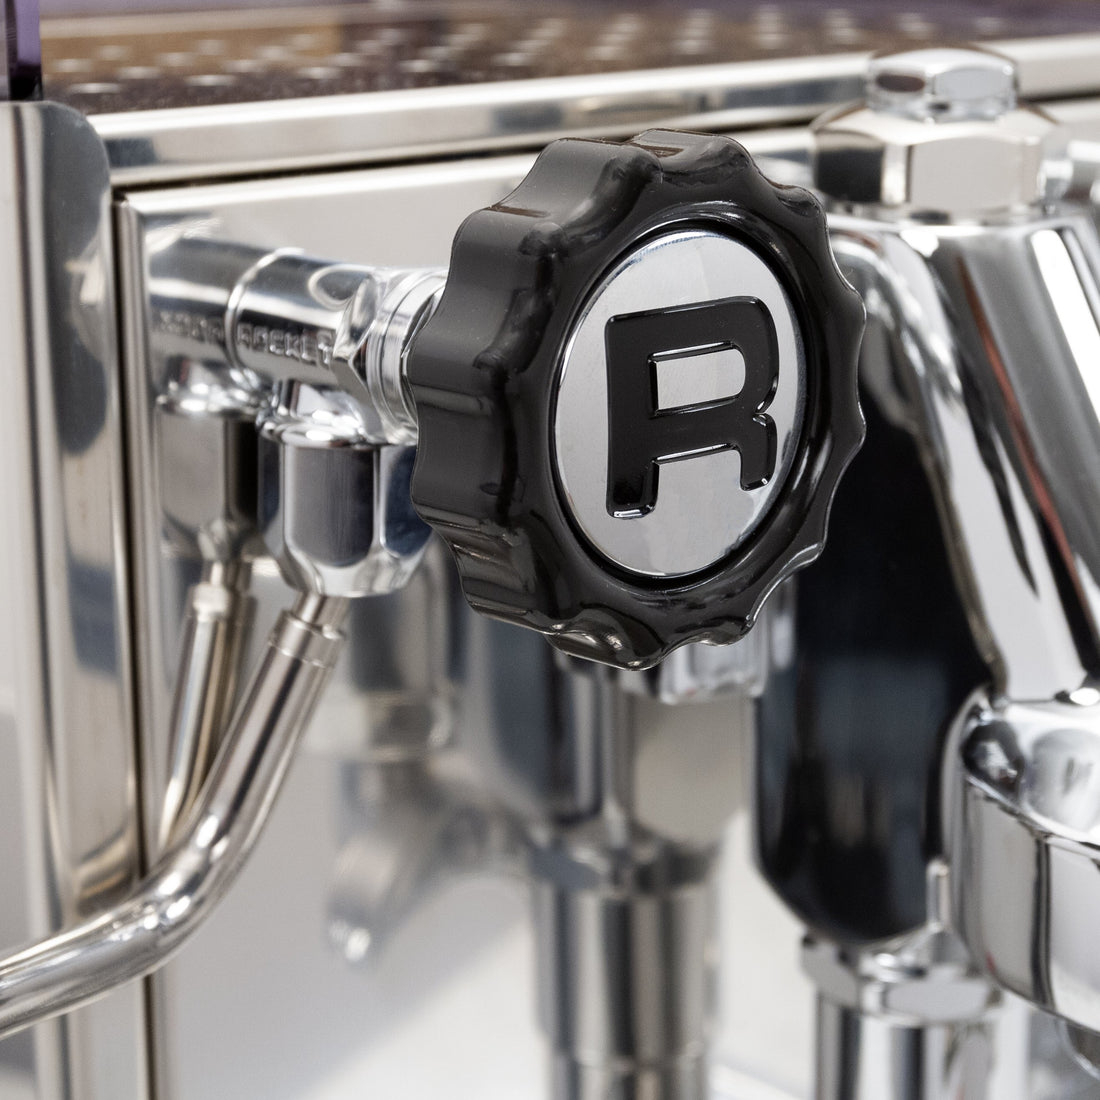 Steam knob emblazoned with Rocket Espresso's "R"